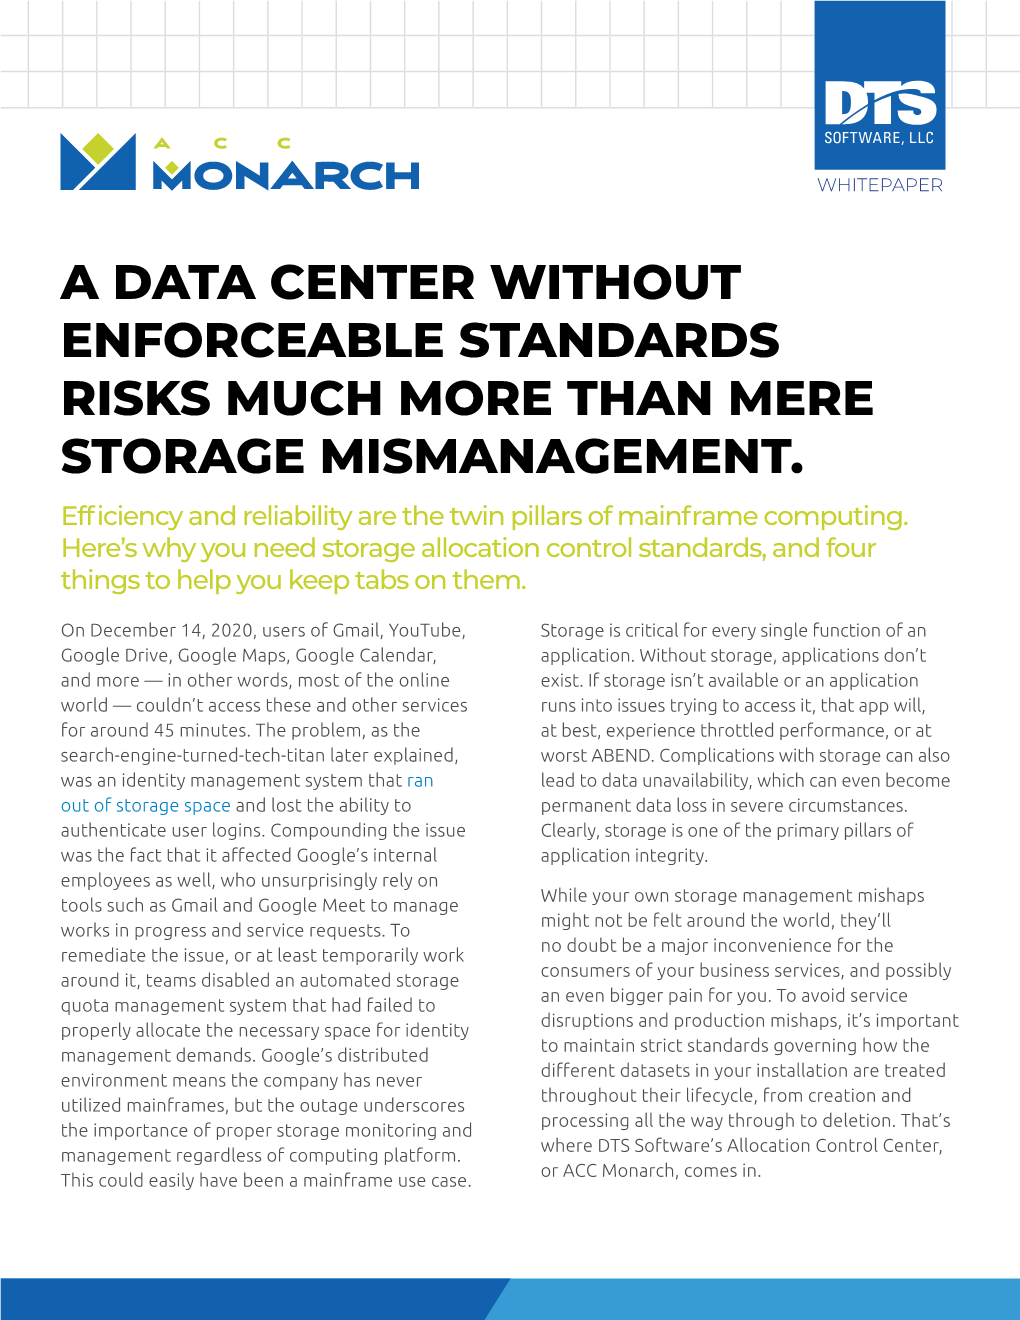 A Data Center Without Enforceable Standards Risks Much More Than Mere Storage Mismanagement